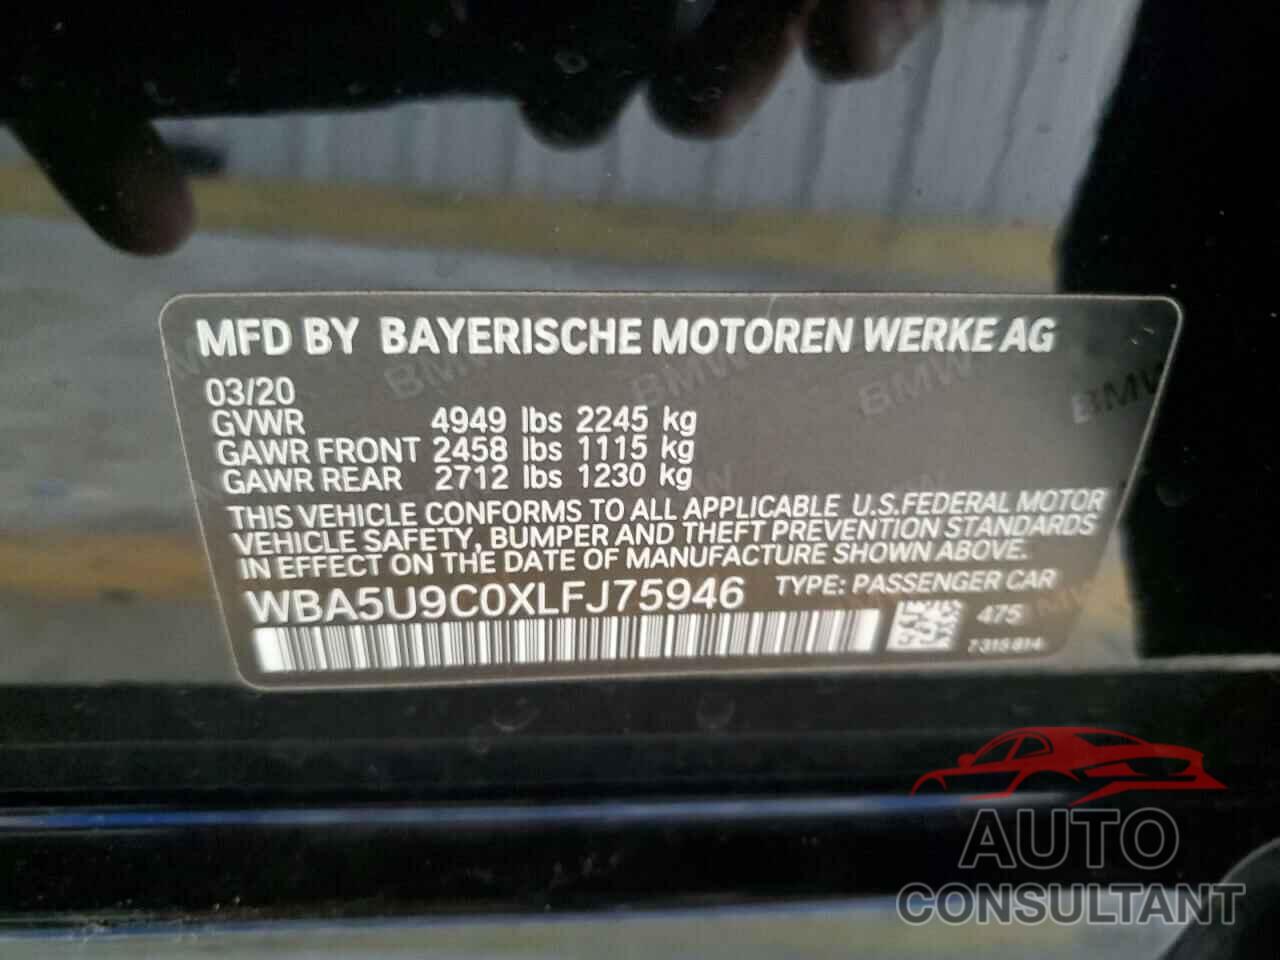 BMW M3 2020 - WBA5U9C0XLFJ75946